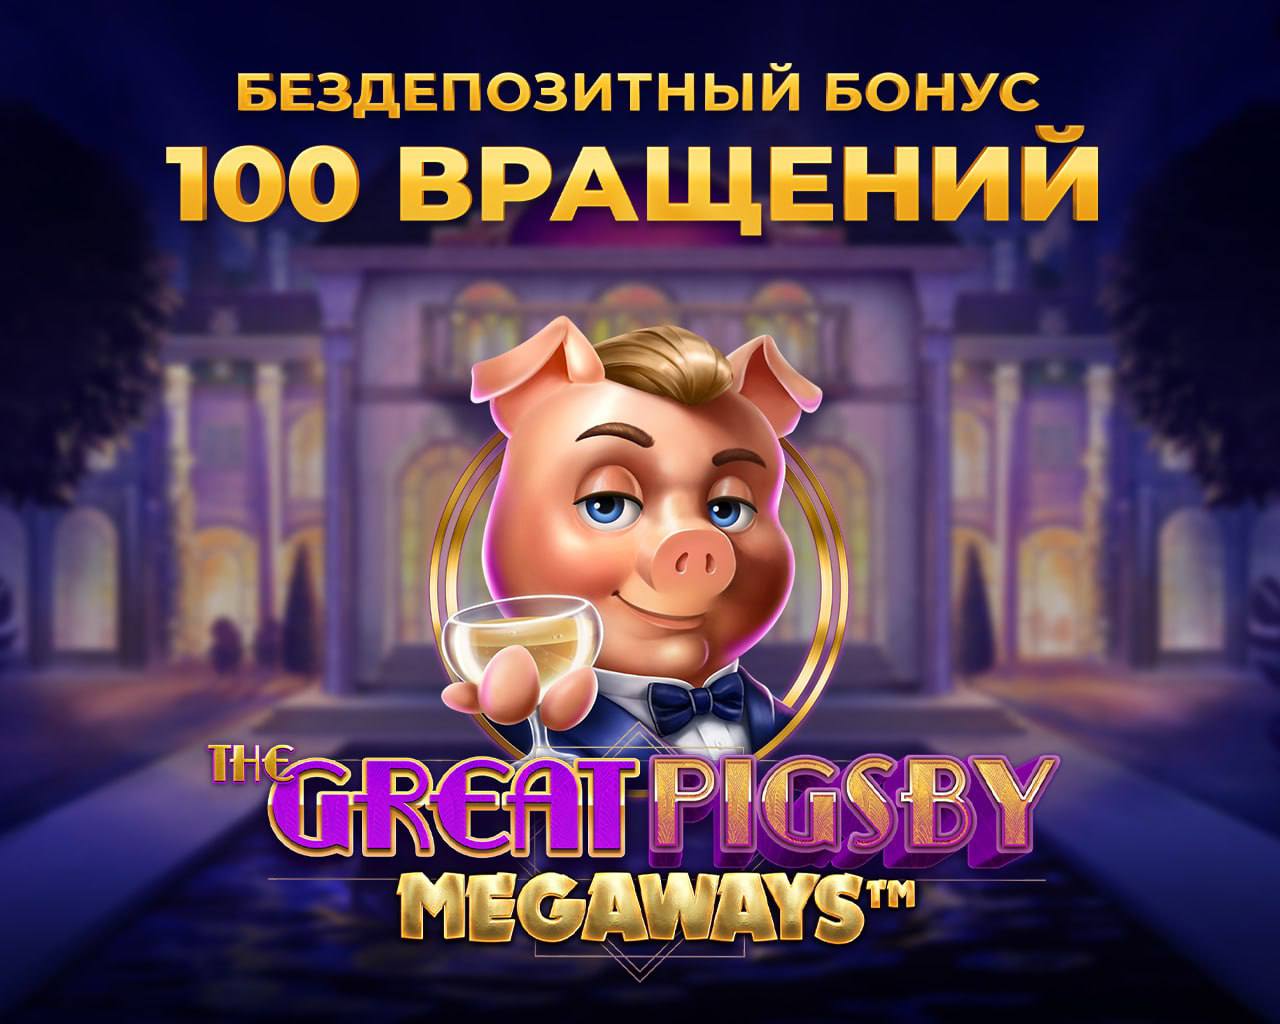 Вавада рабочее зеркало 37. Great PIGSBY 100 вращений. The great PIGSBY megaways. 100 Вращений great PIGSBY megaways за регистрацию. Свинья Вавада great PIGSBY megaways.